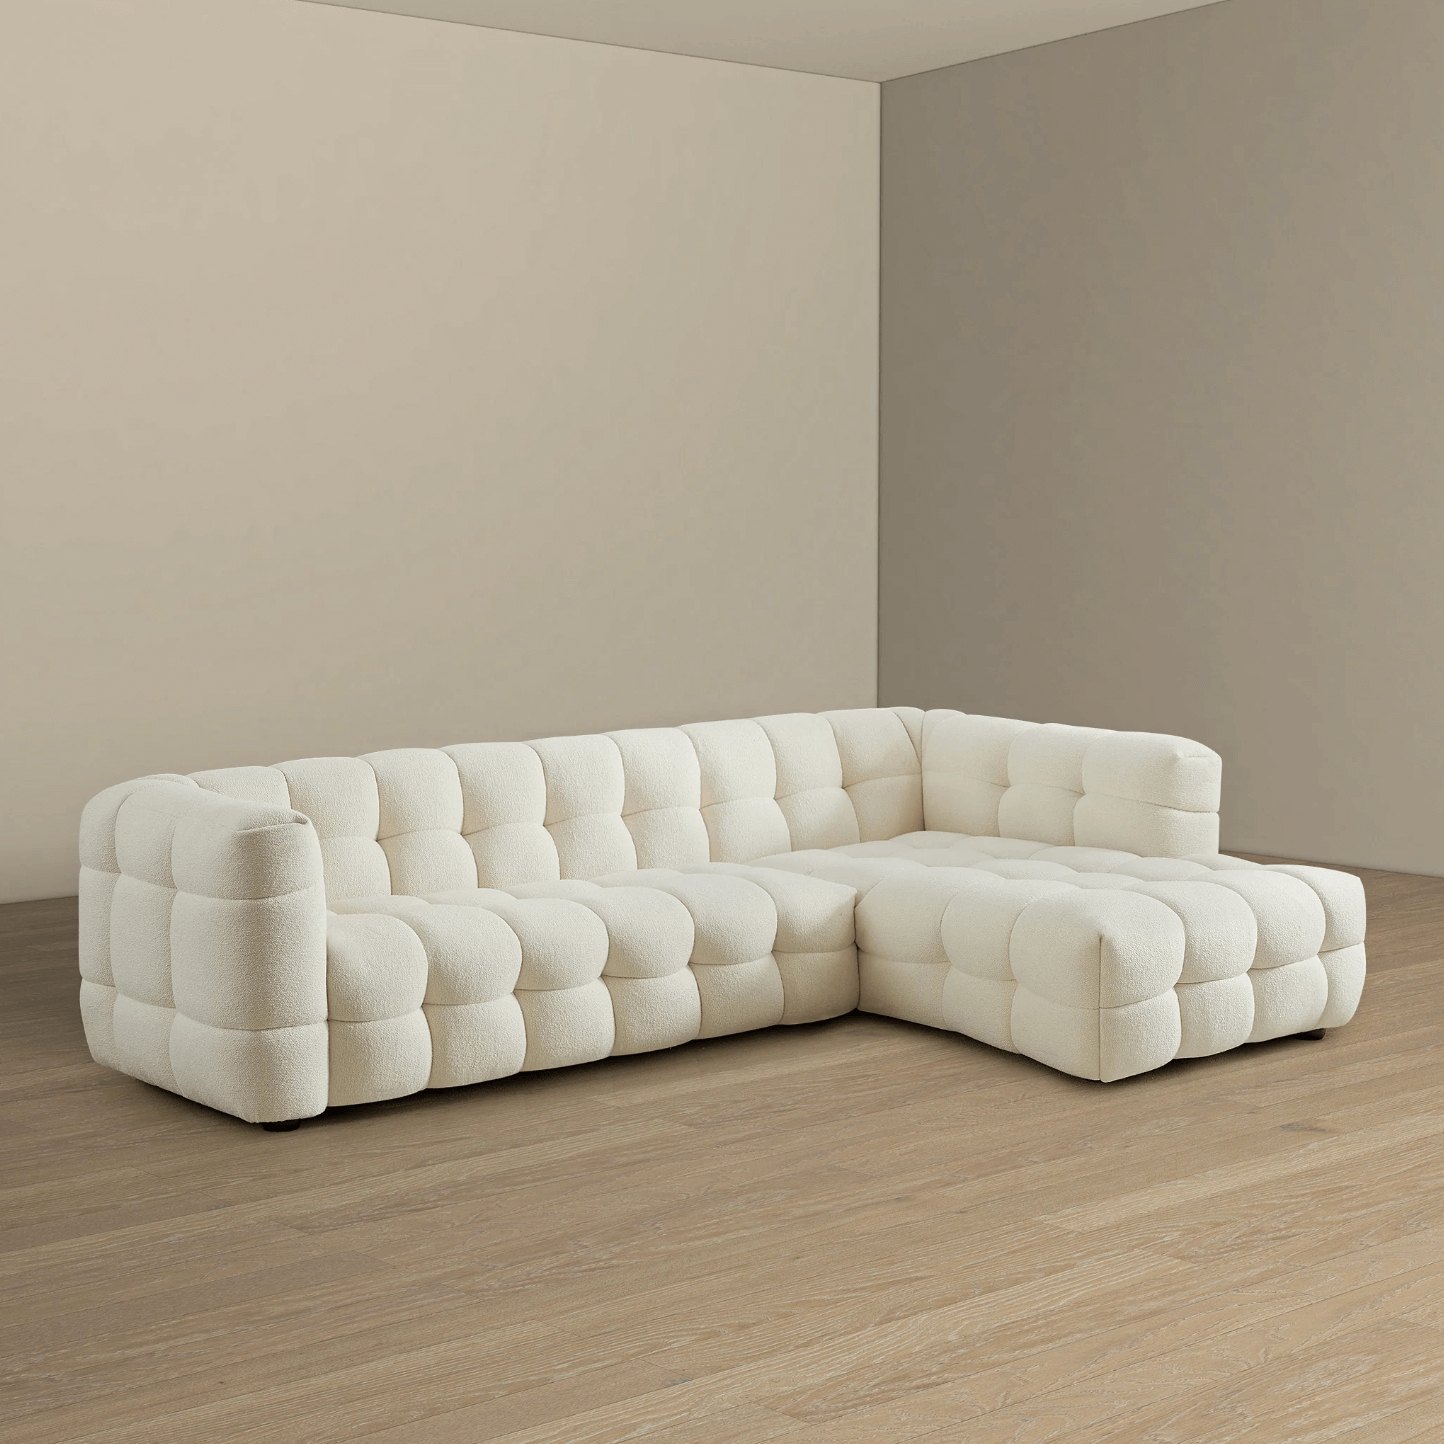 Morrison Tufted Boucle Right Facing Chaise Sectional Sofa, Cream 141" - Revel Sofa 